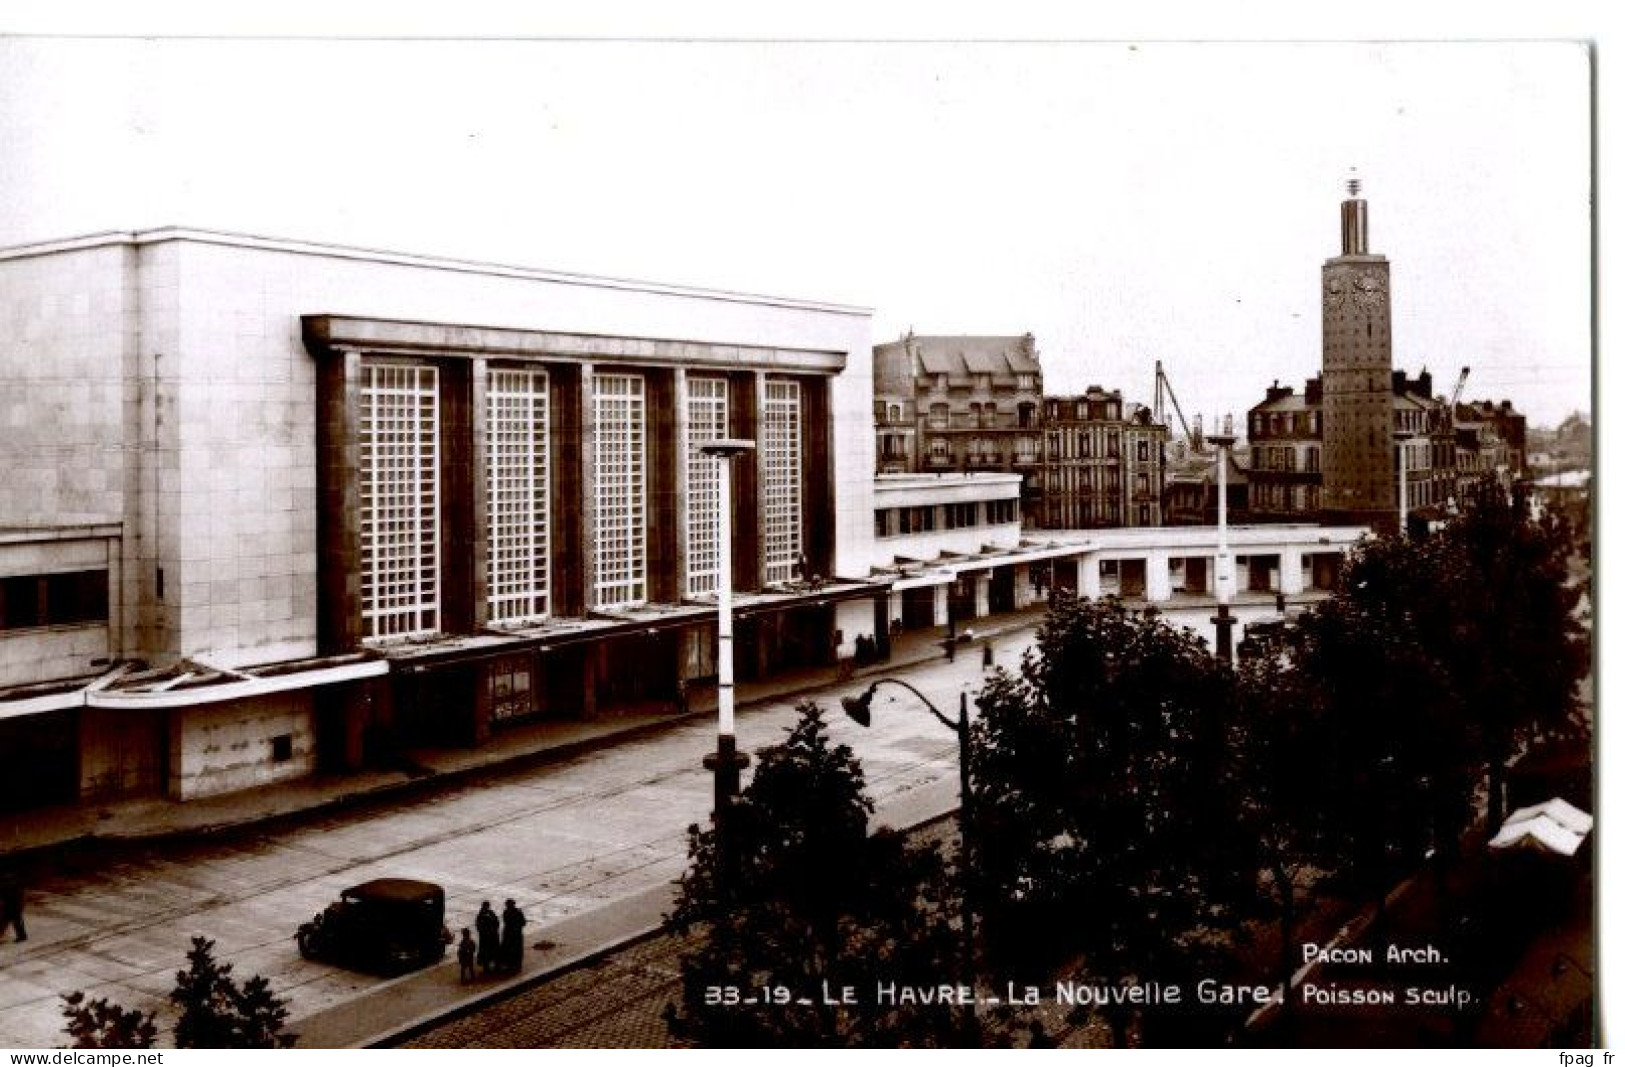 Le Havre (76 - Seine Maritime) - 33 - 19 - La Nouvelle Gare - Poisson Sculp. - Gare